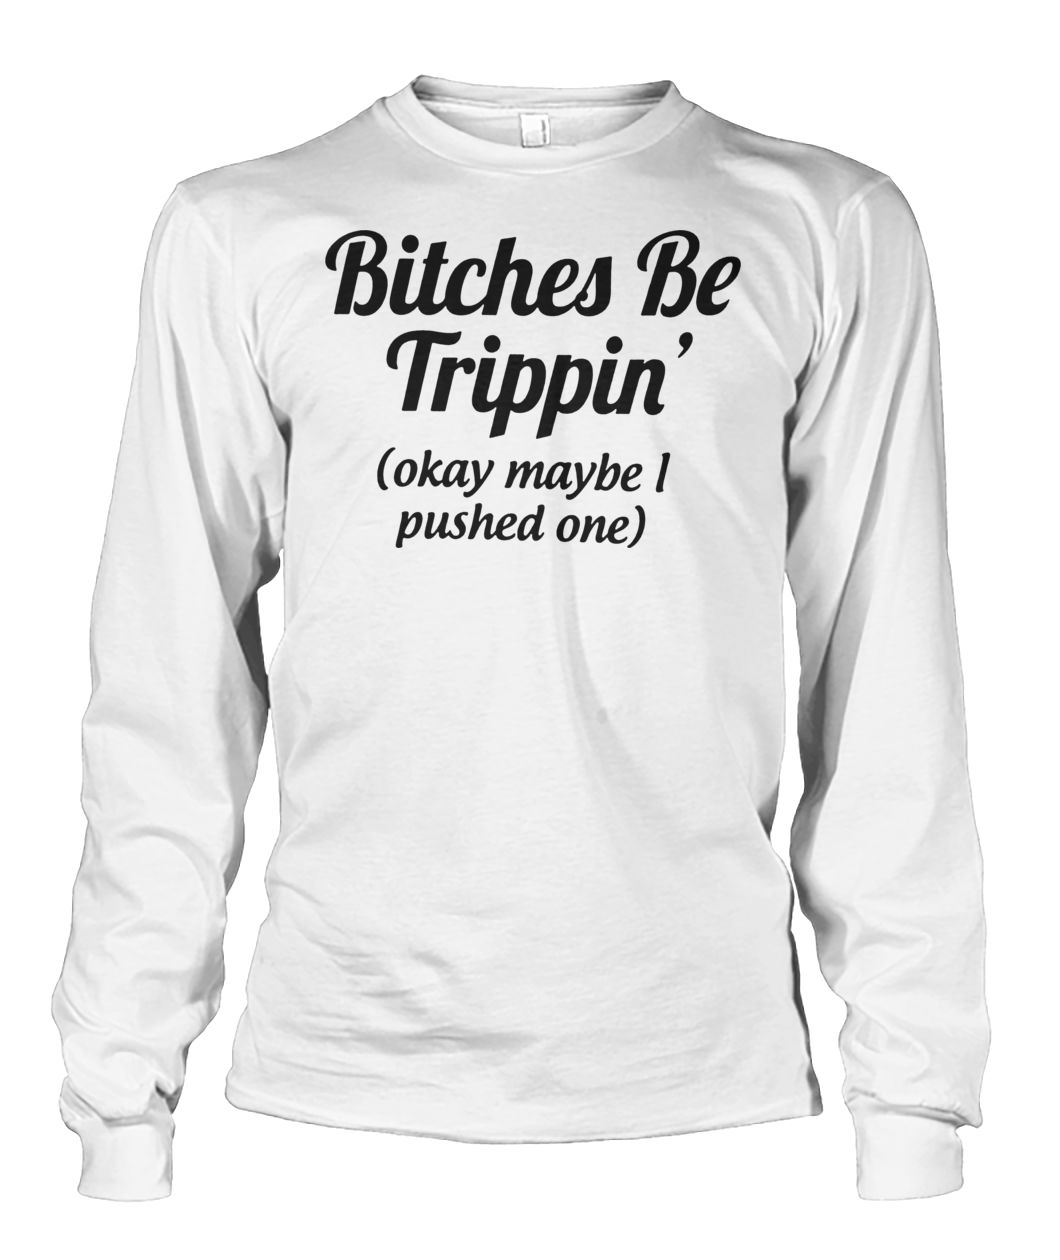 Bitches be trippin'ok maybe I pushed one unisex long sleeve